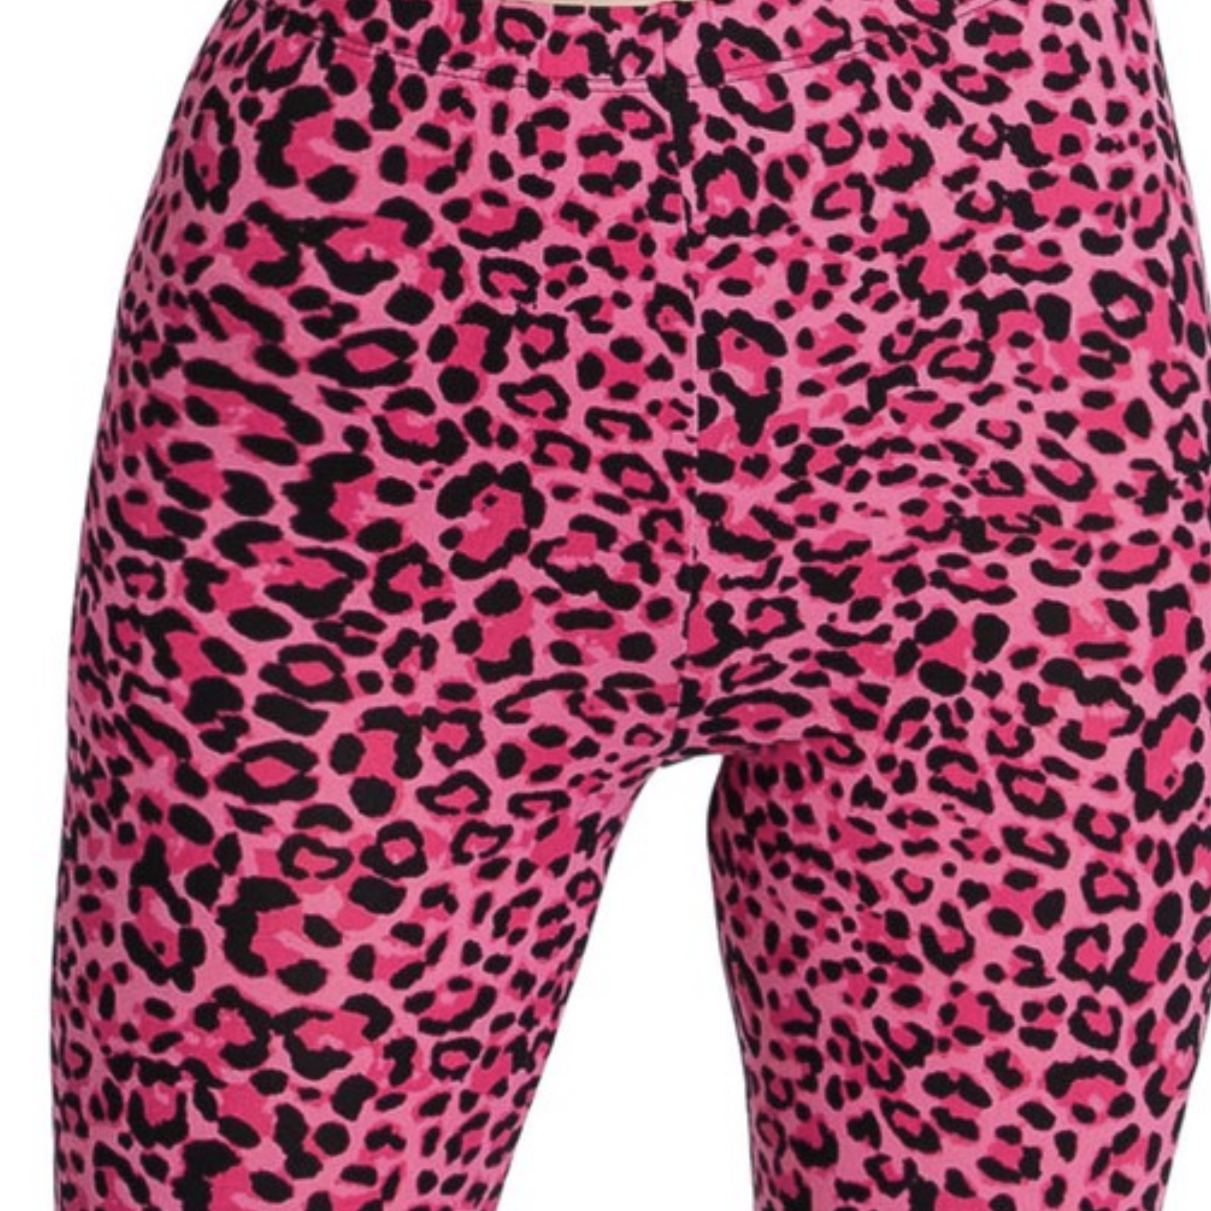 Cheetah shorts - We Stay Pretty